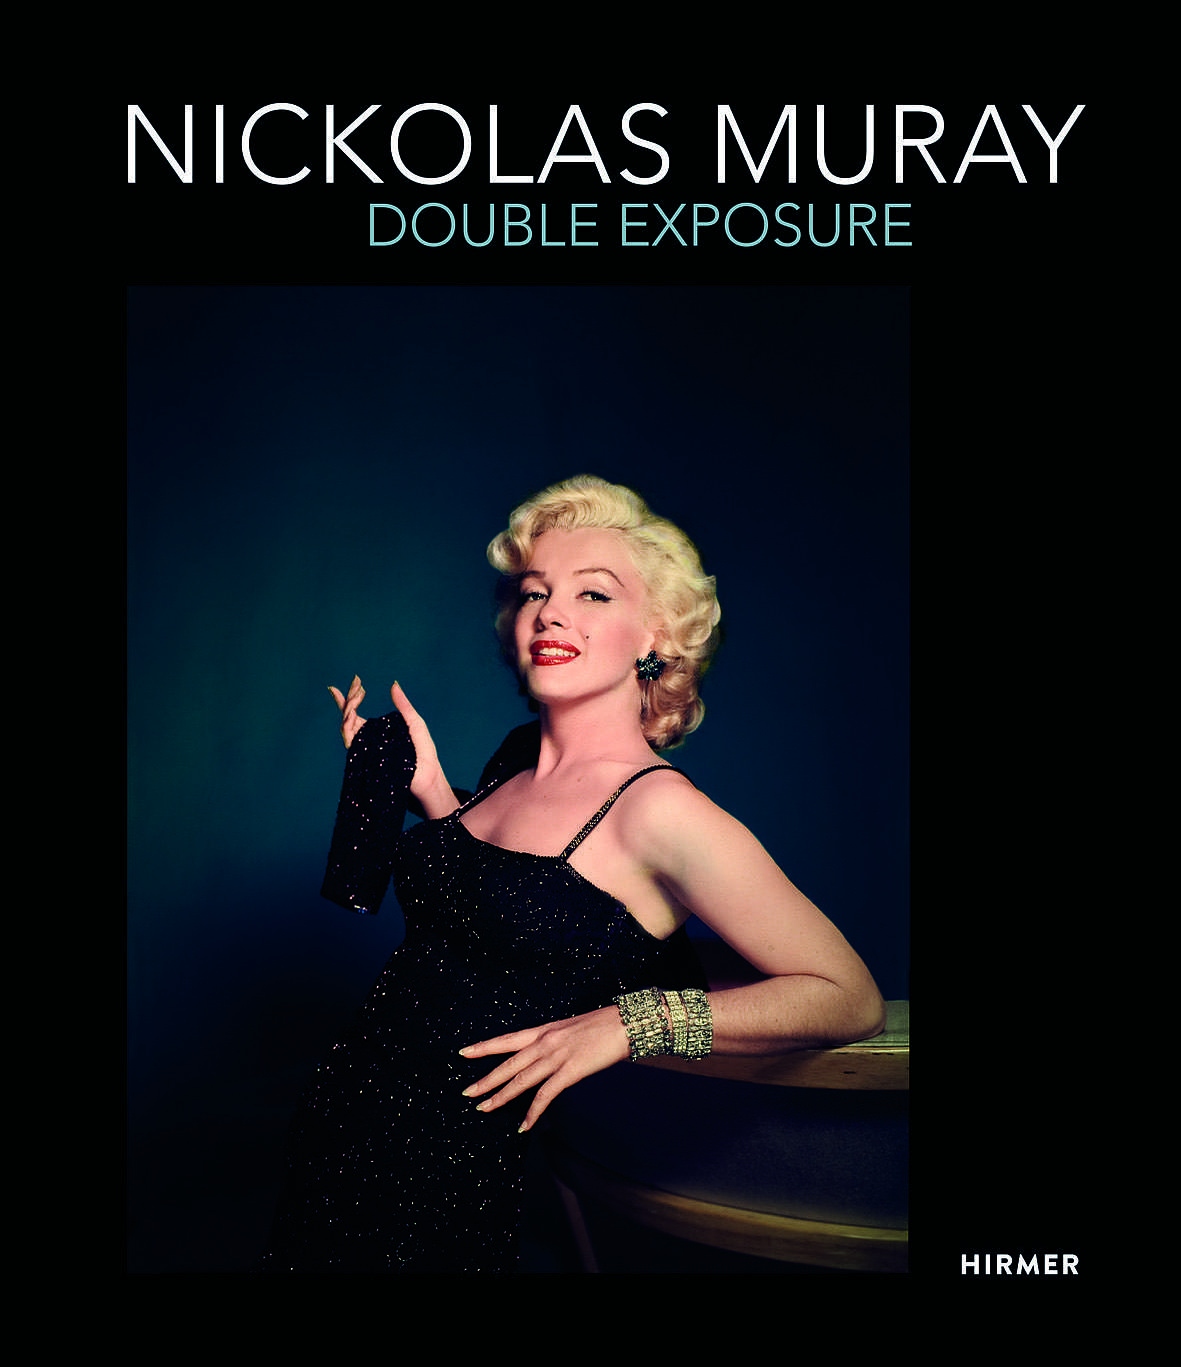 Extraordinary Double Exposures: Win the Photobook 'Double Exposure' from Nickolas Muray!